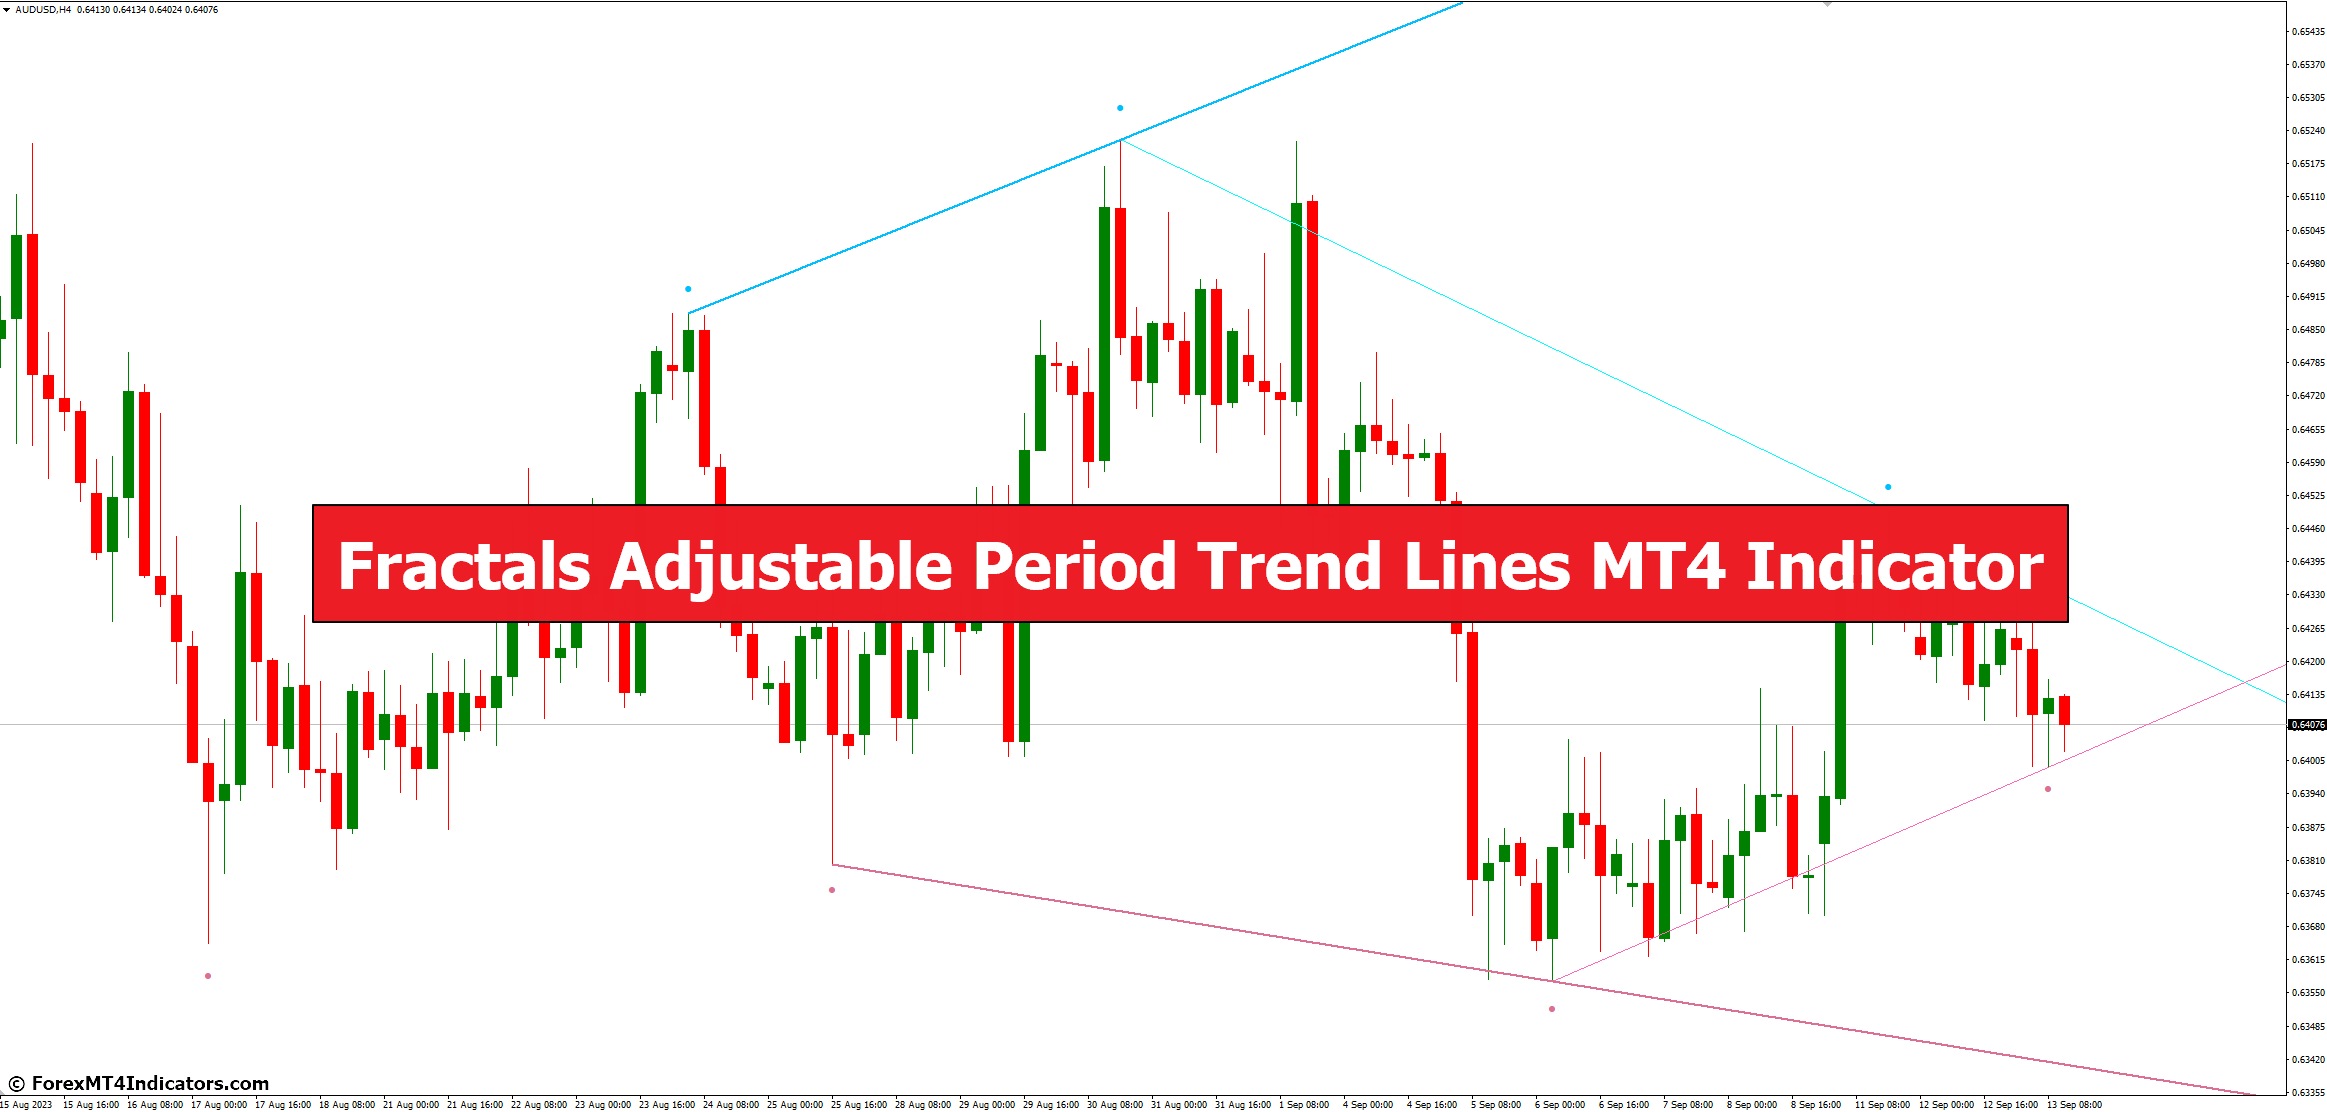 Fractals Adjustable Period Trend Lines MT4 Indicator